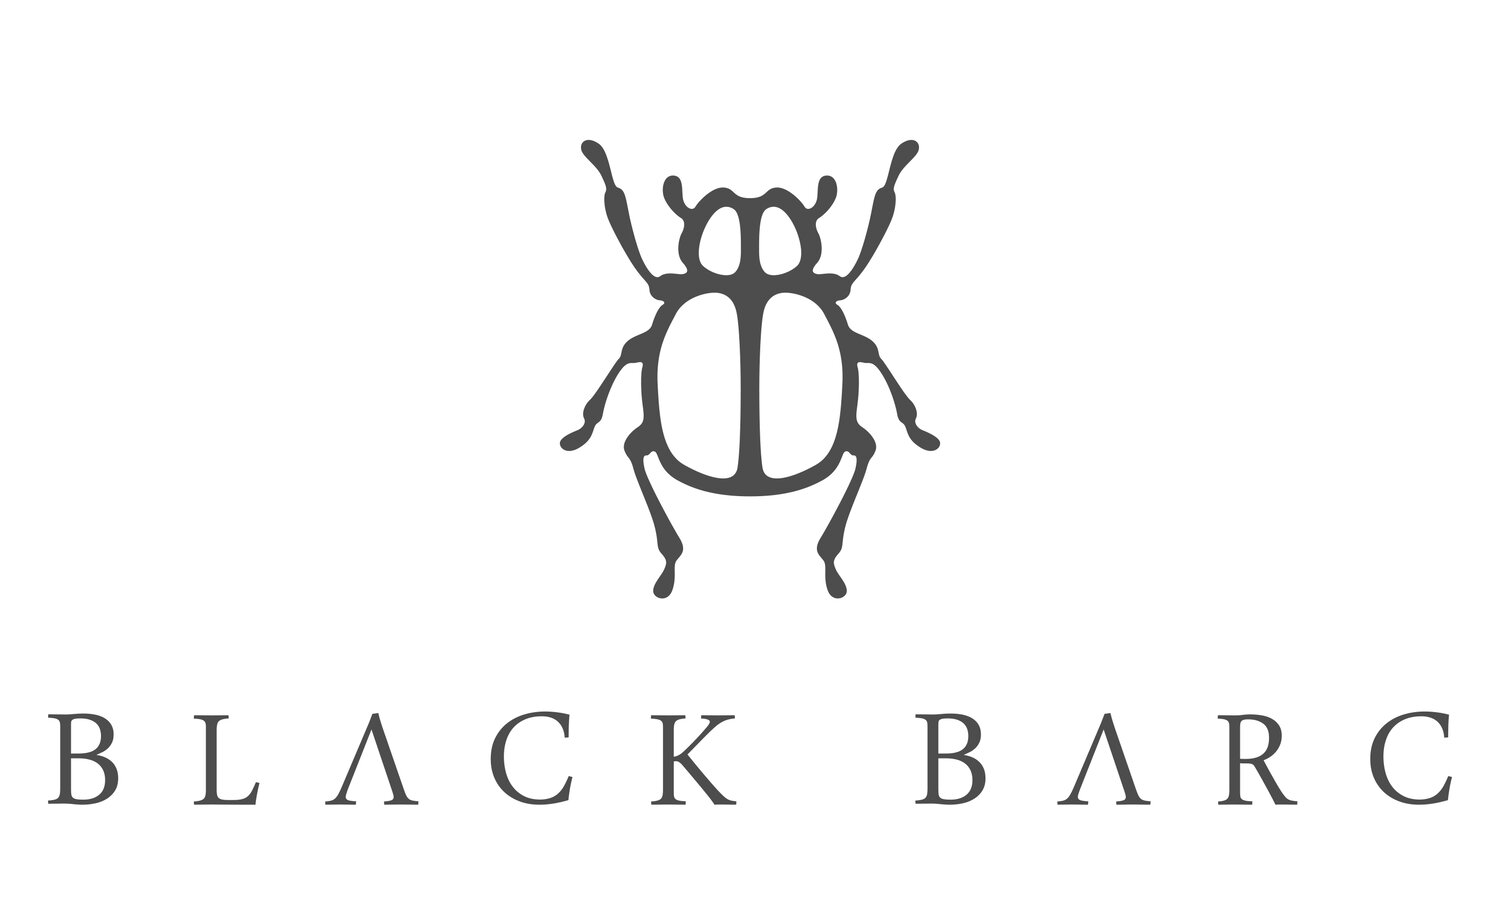 Black Barc